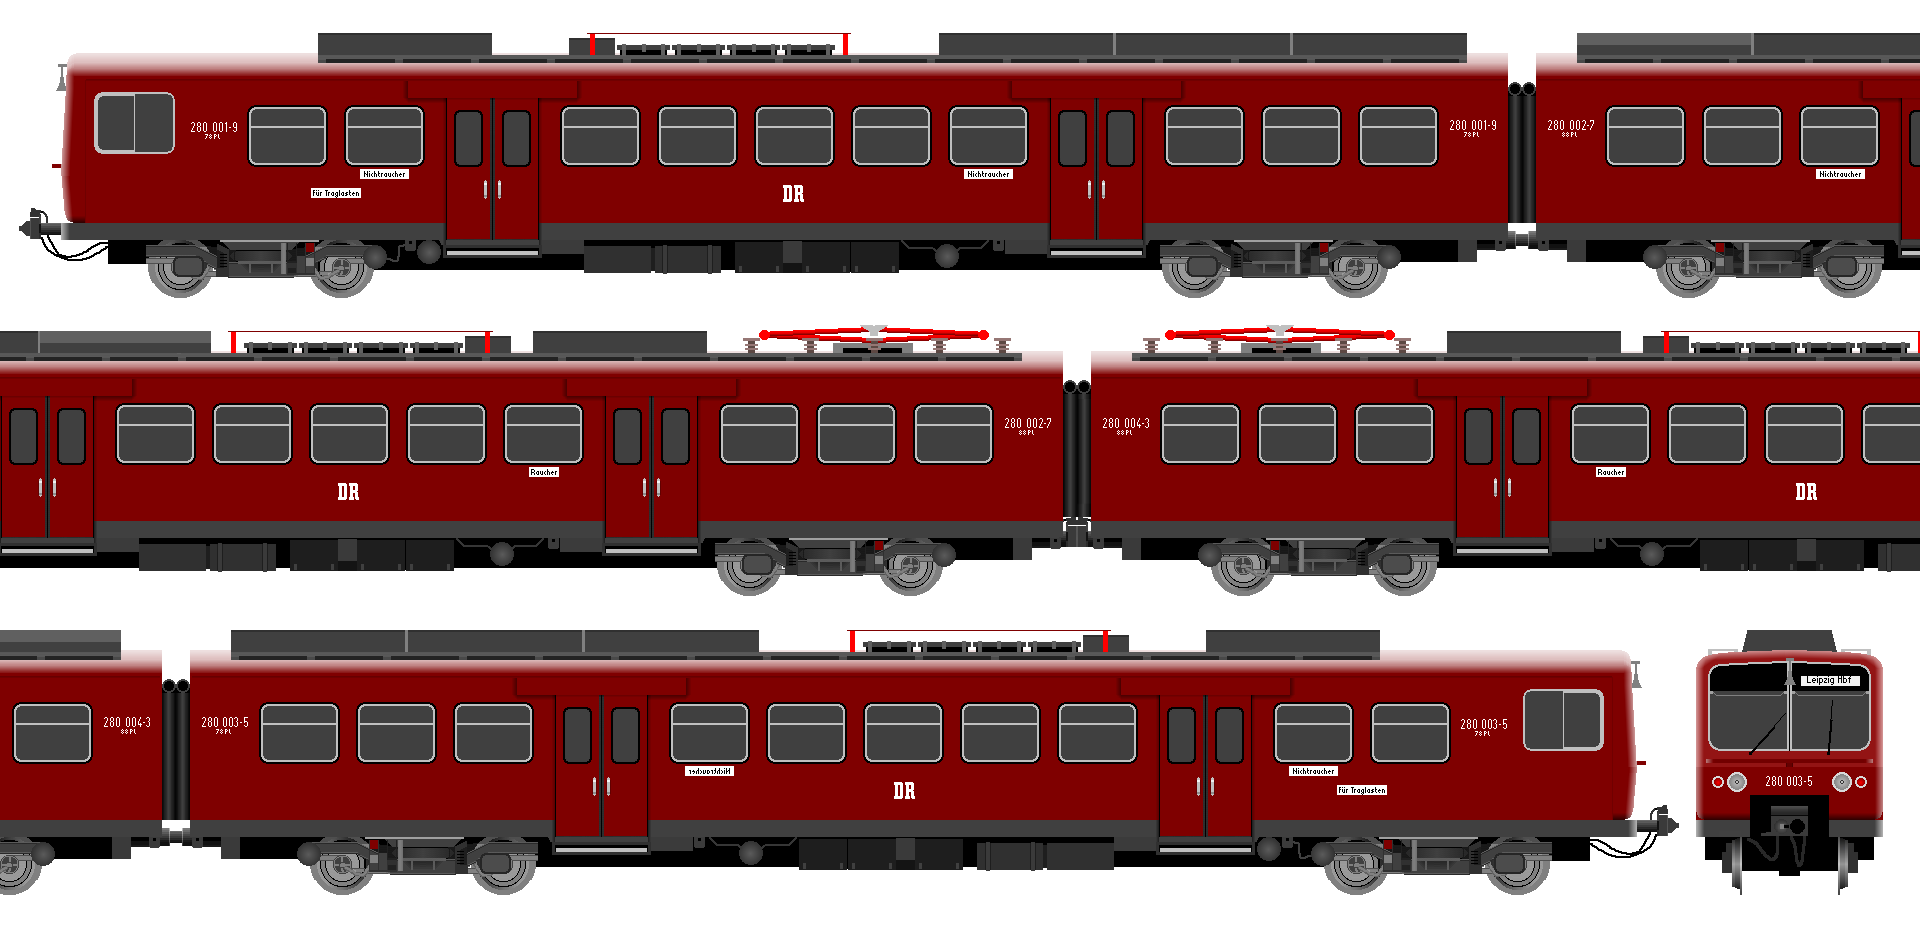 DR-Baureihe 280